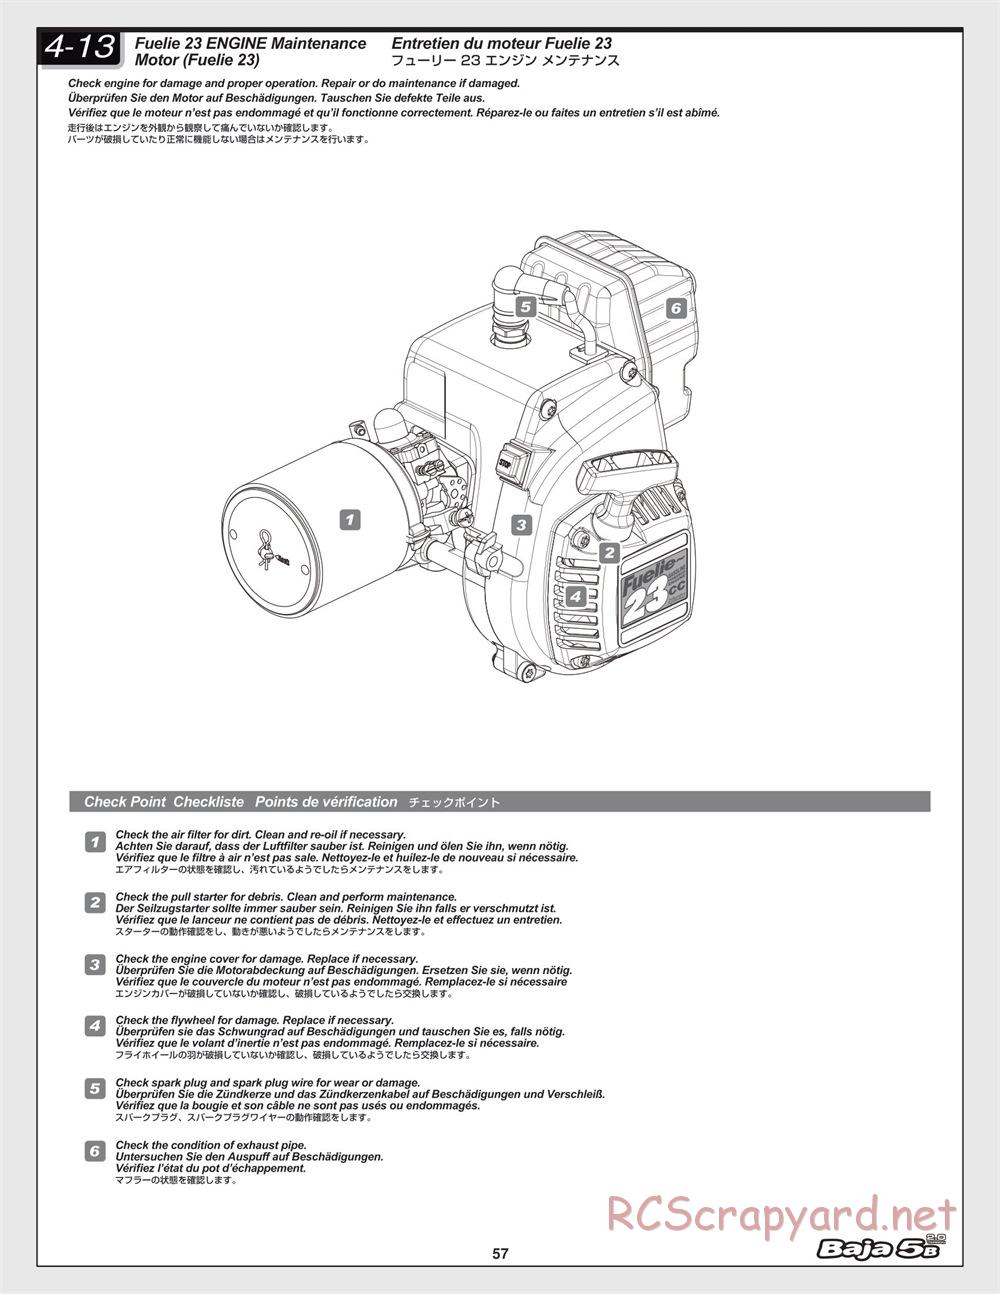 HPI - Baja 5B 2.0 - Manual - Page 57